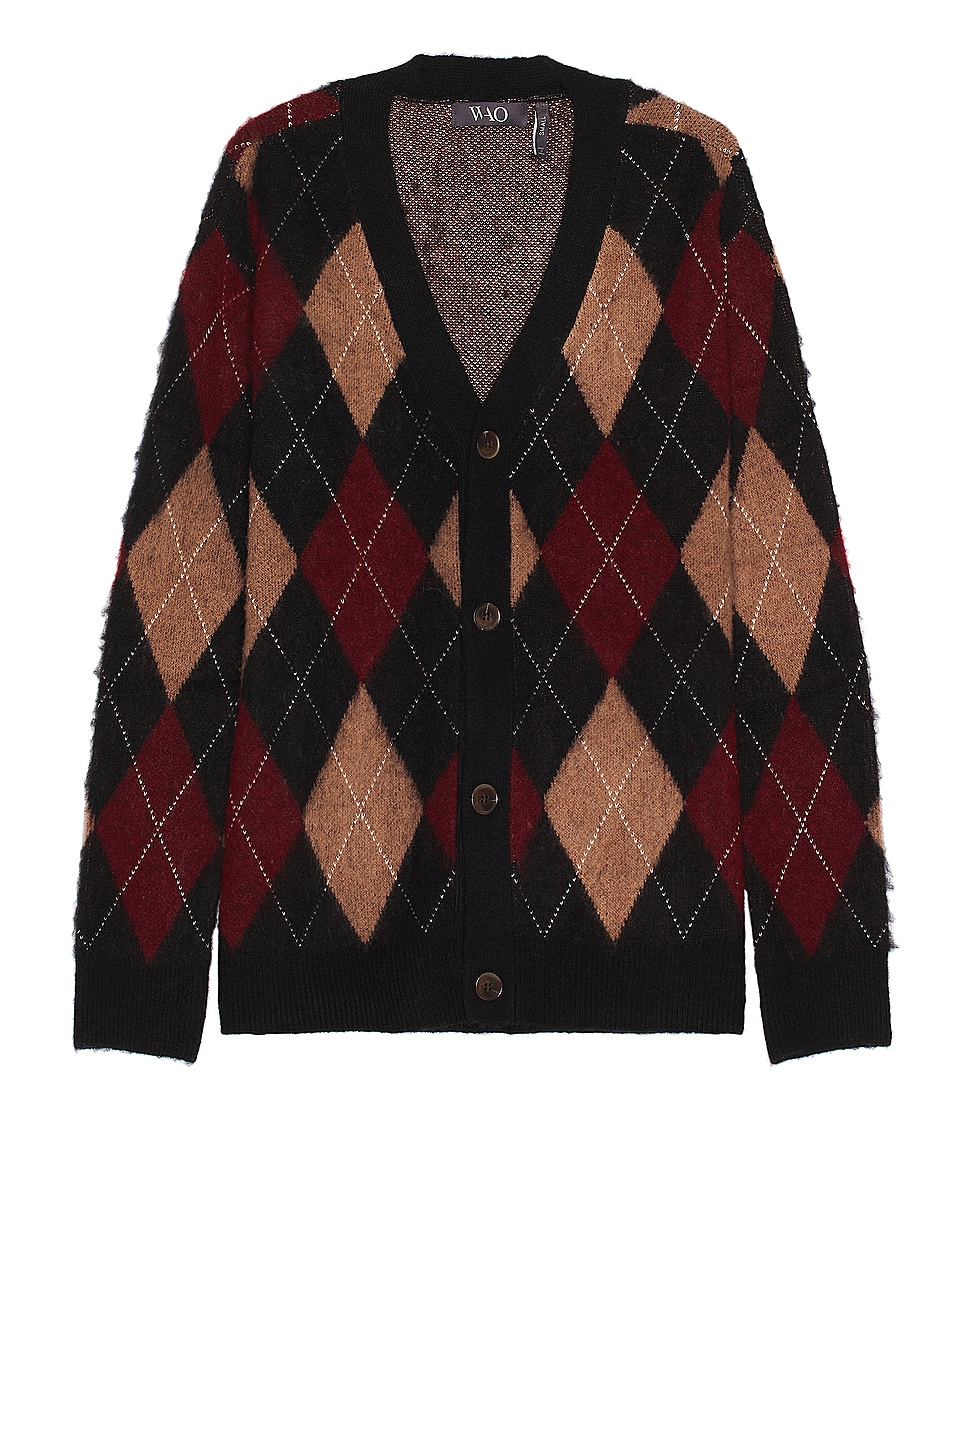 Image 1 of WAO Argyle Sweater Cardigan in Brown & Burgundy